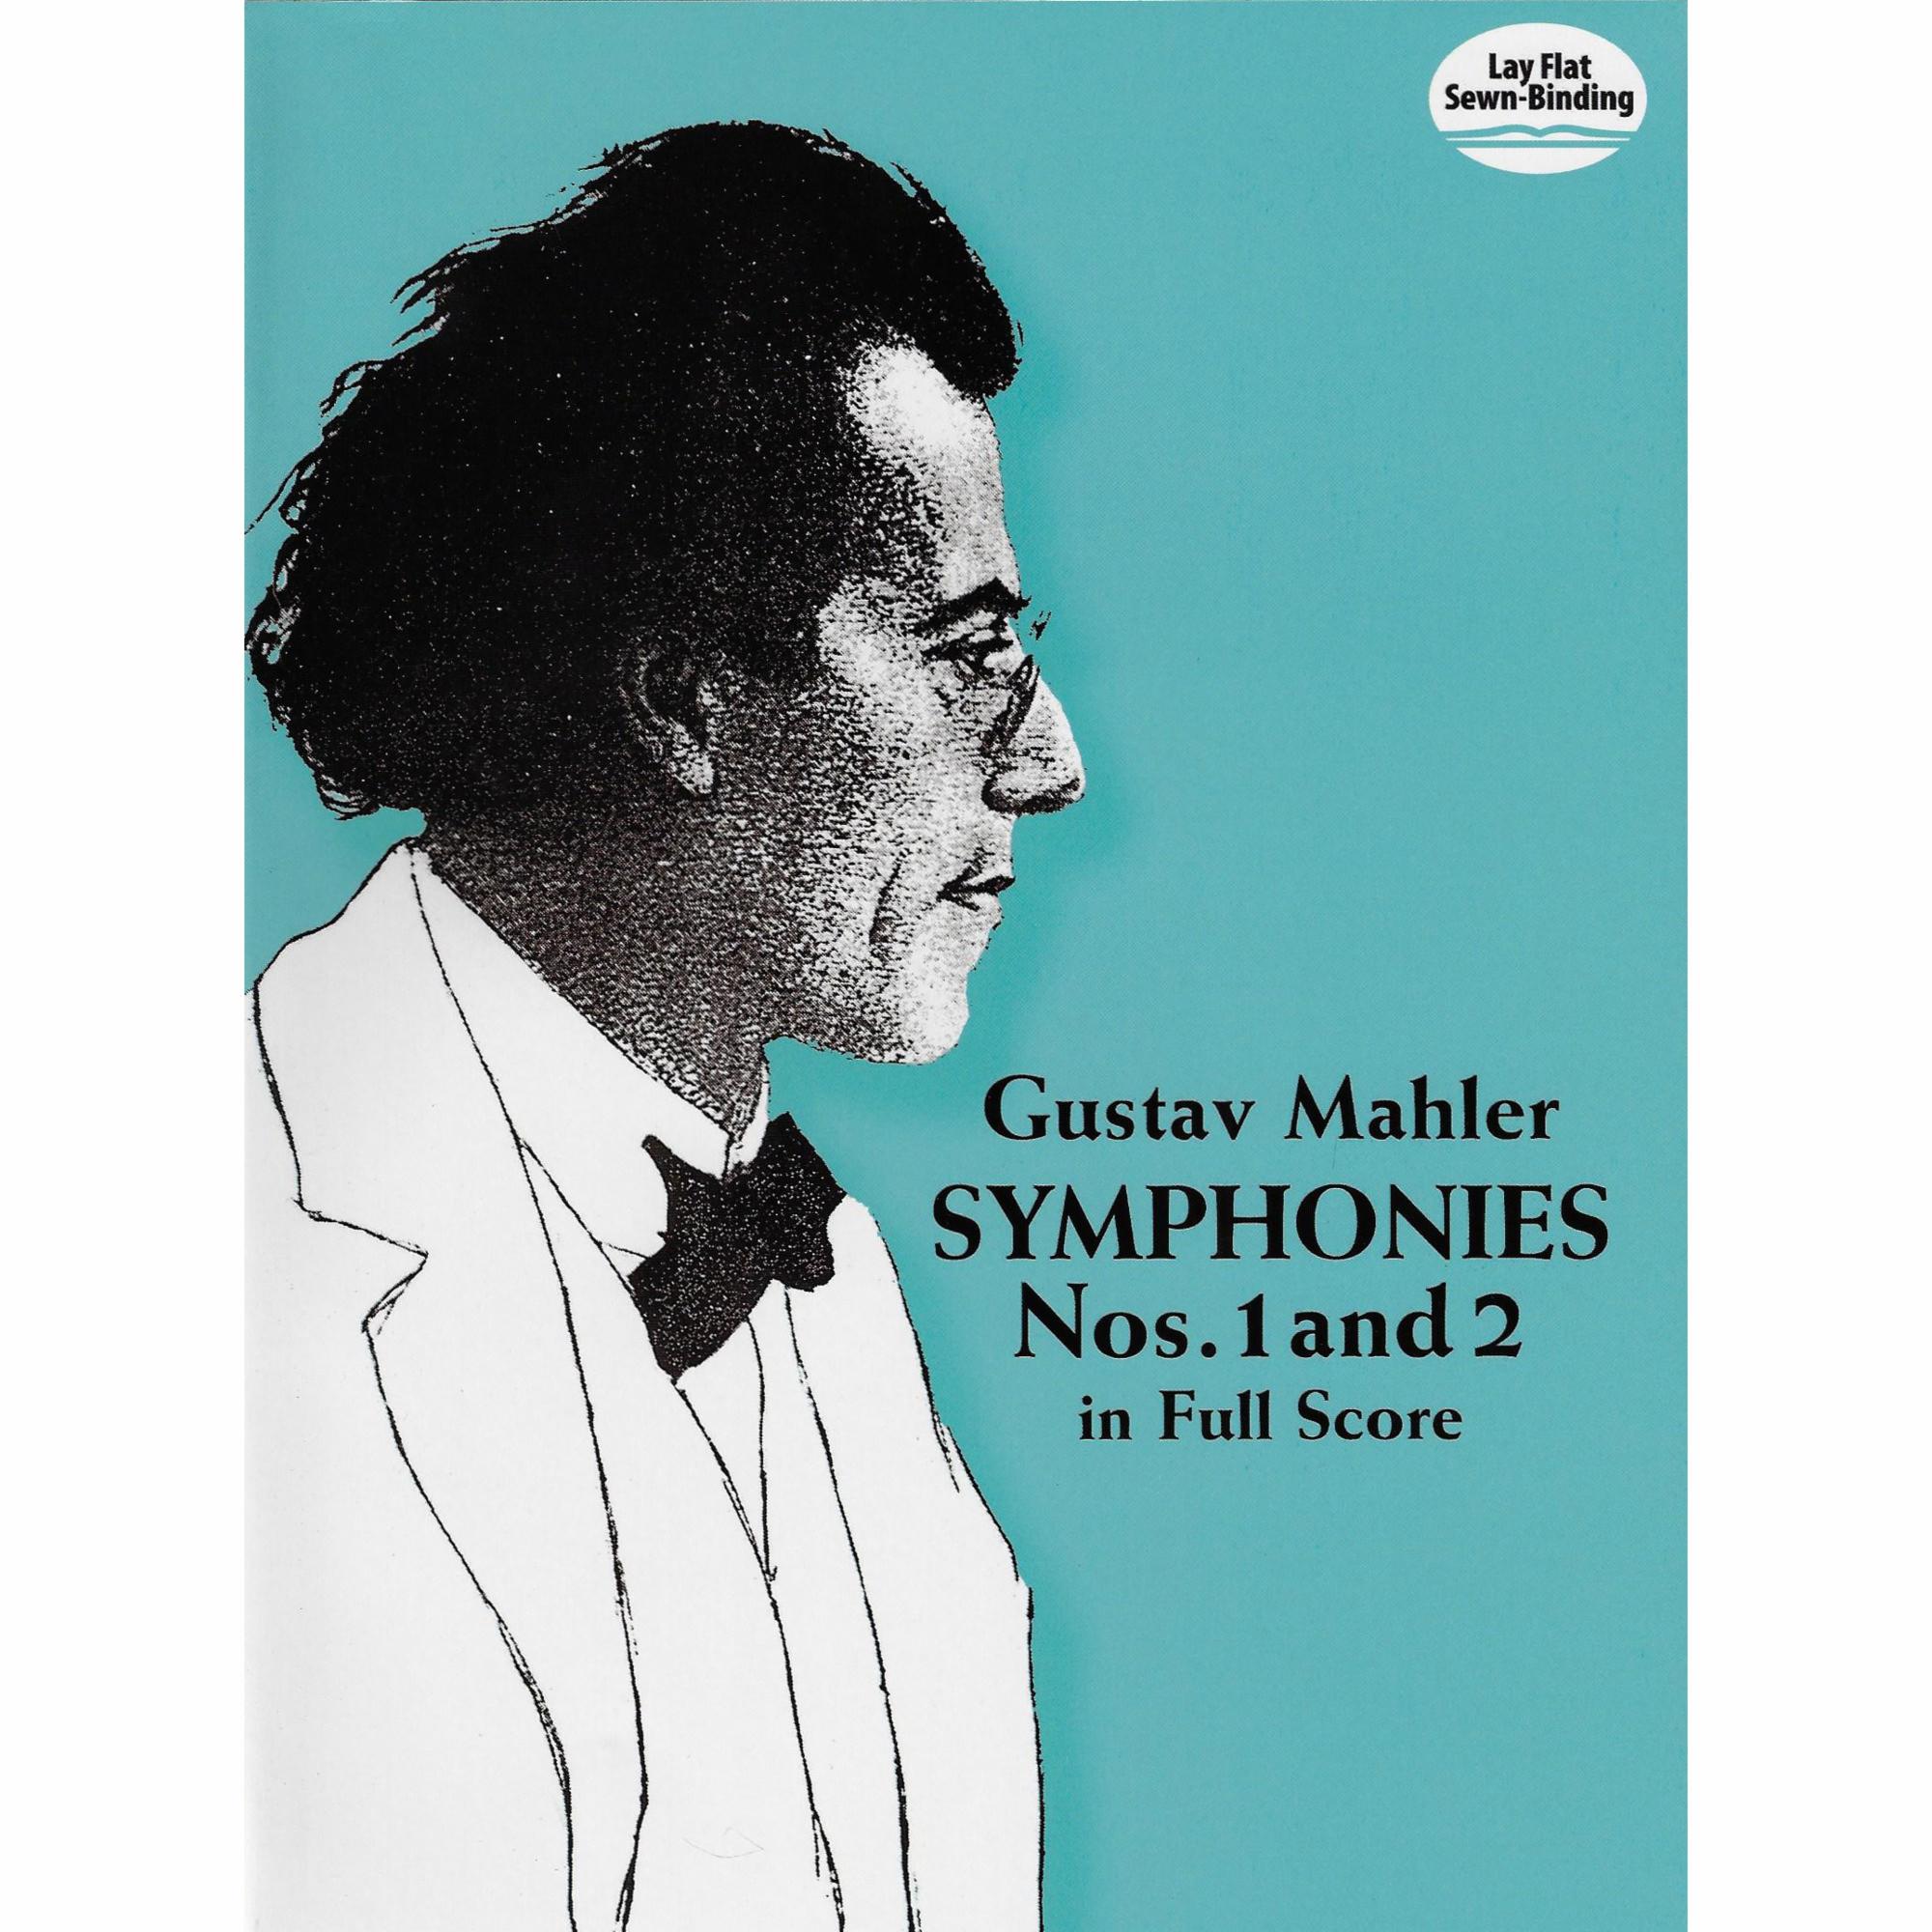 Mahler -- Symphonies Nos. 1 and 2 in Full Score